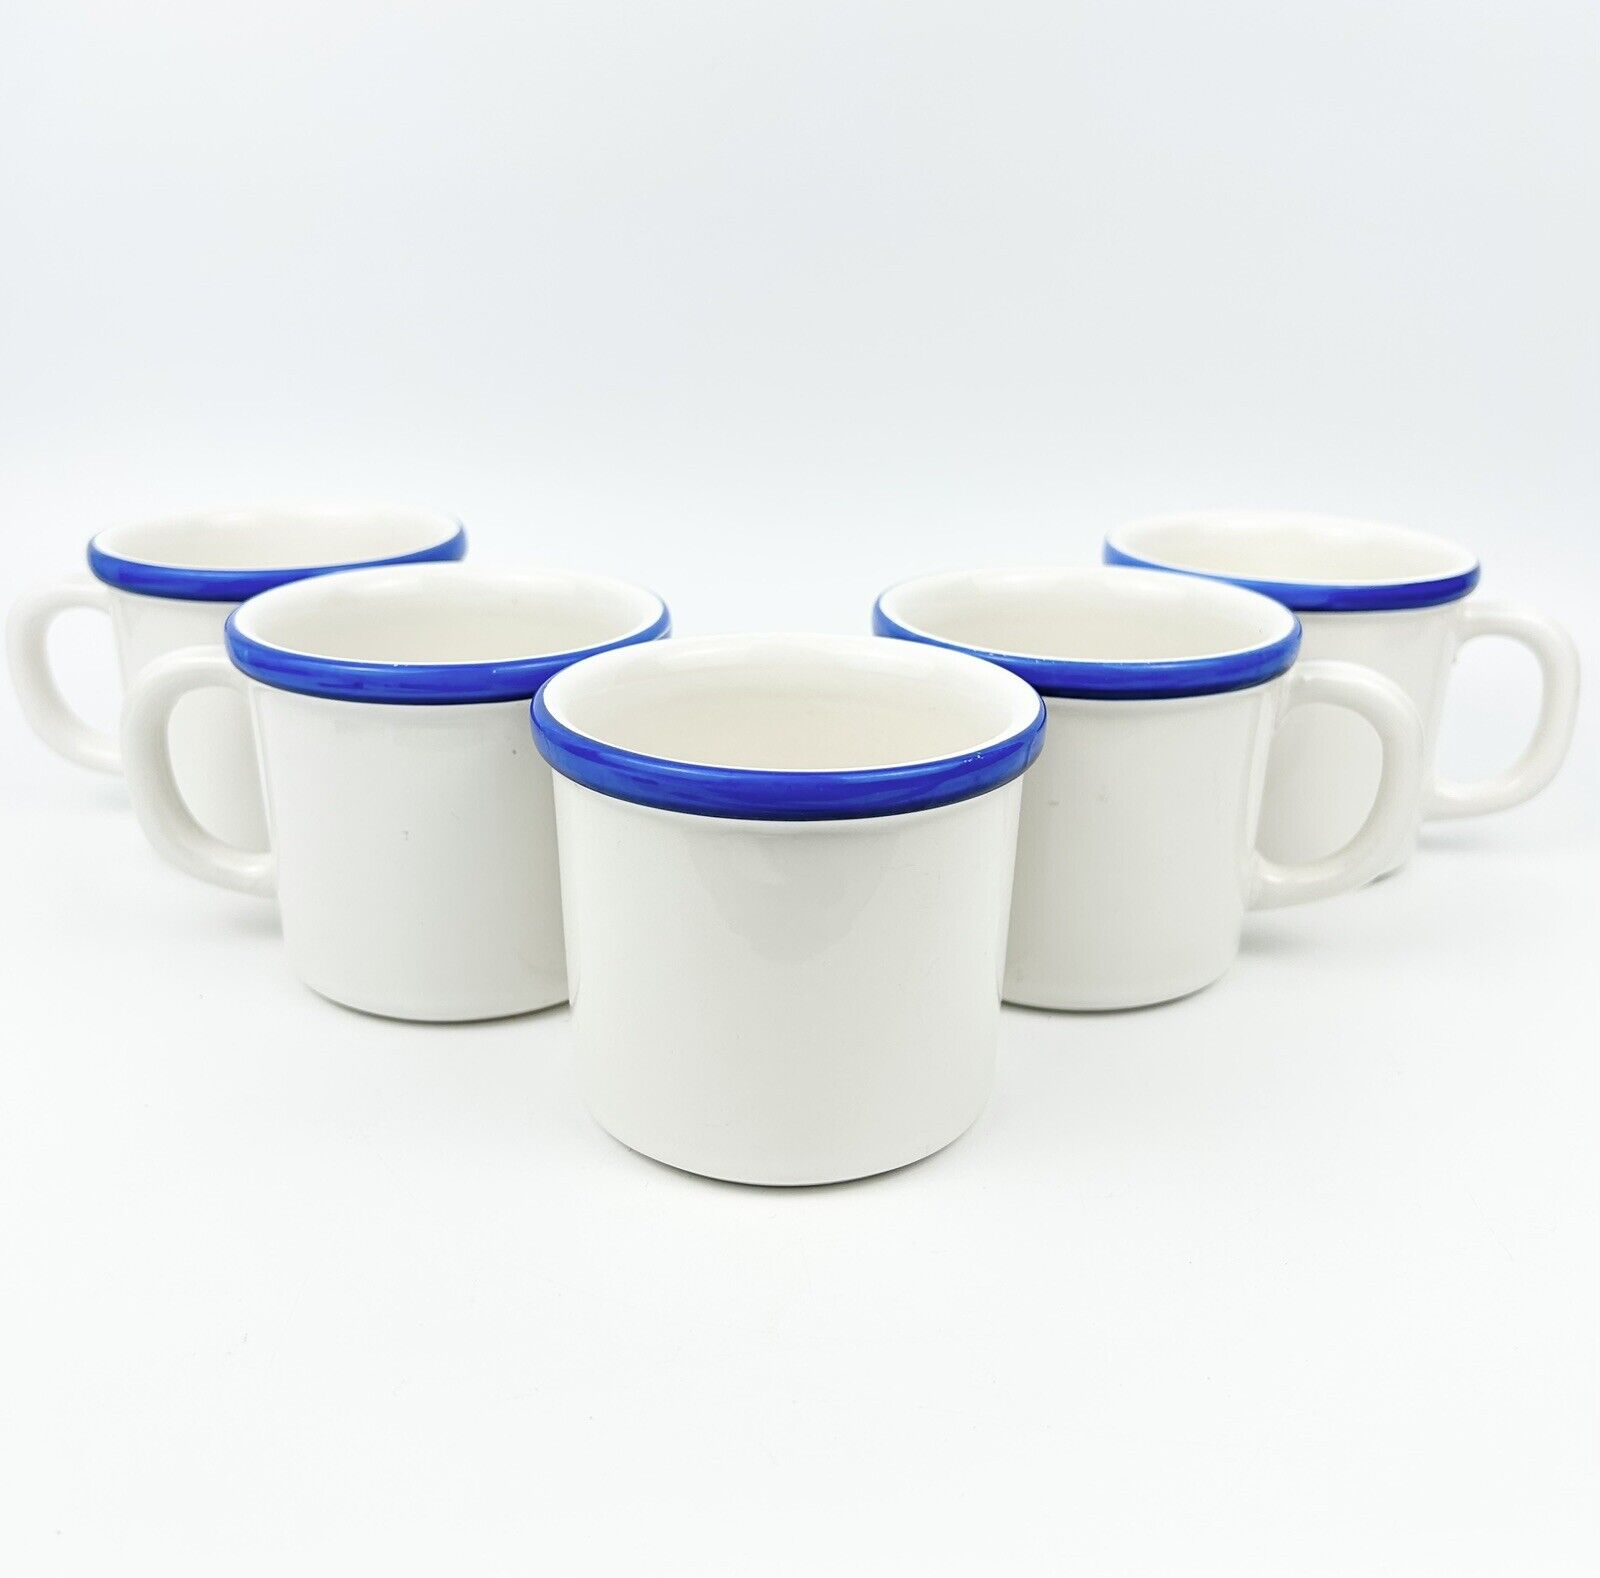 5 Vintage Marimekko Pfaltzgraff Blue Band Flat Cups Good Condition Hard To Find